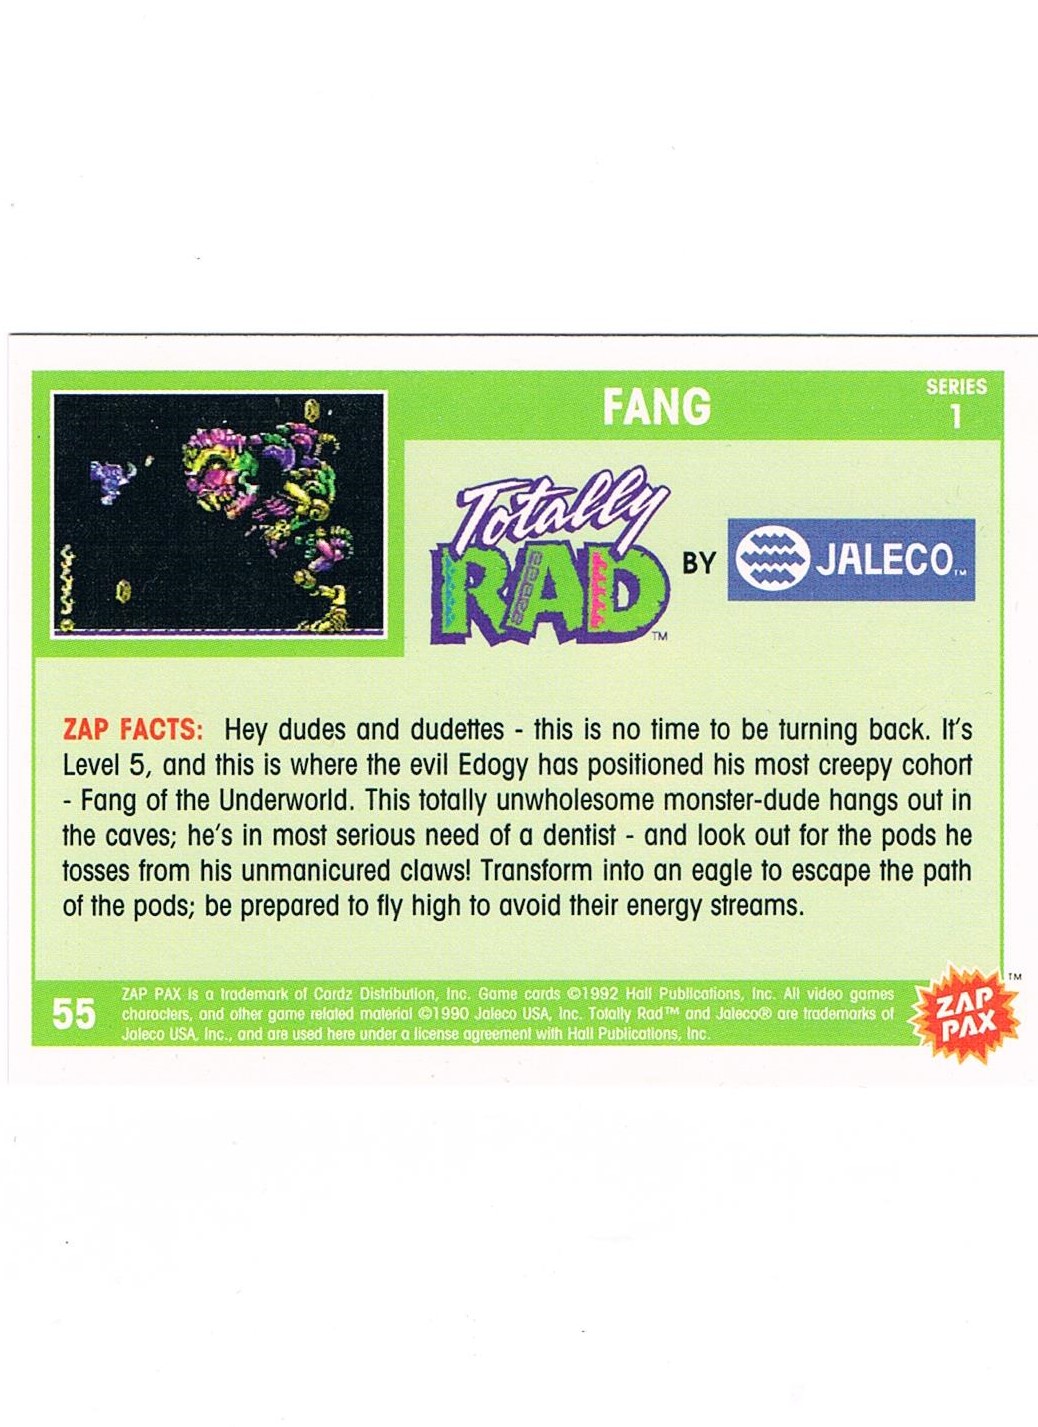 Zap Pax Nr. 55 - Totally Rad Fang 2